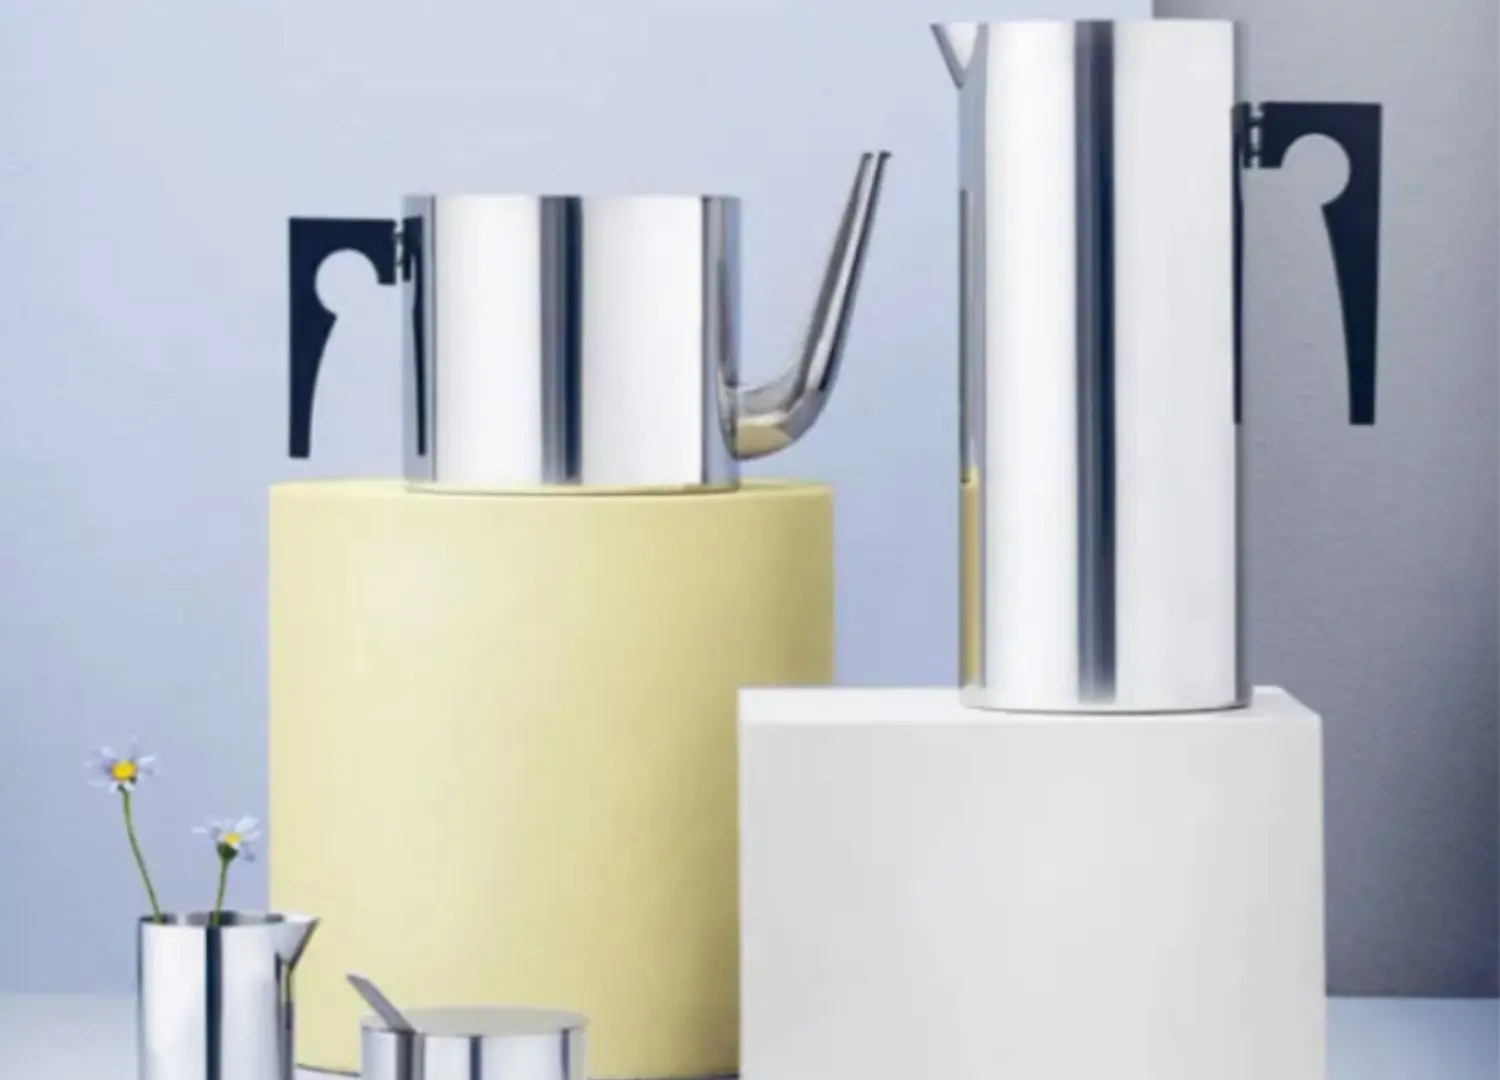 Cylinda _10 most recognized Arne Jacobsen designs